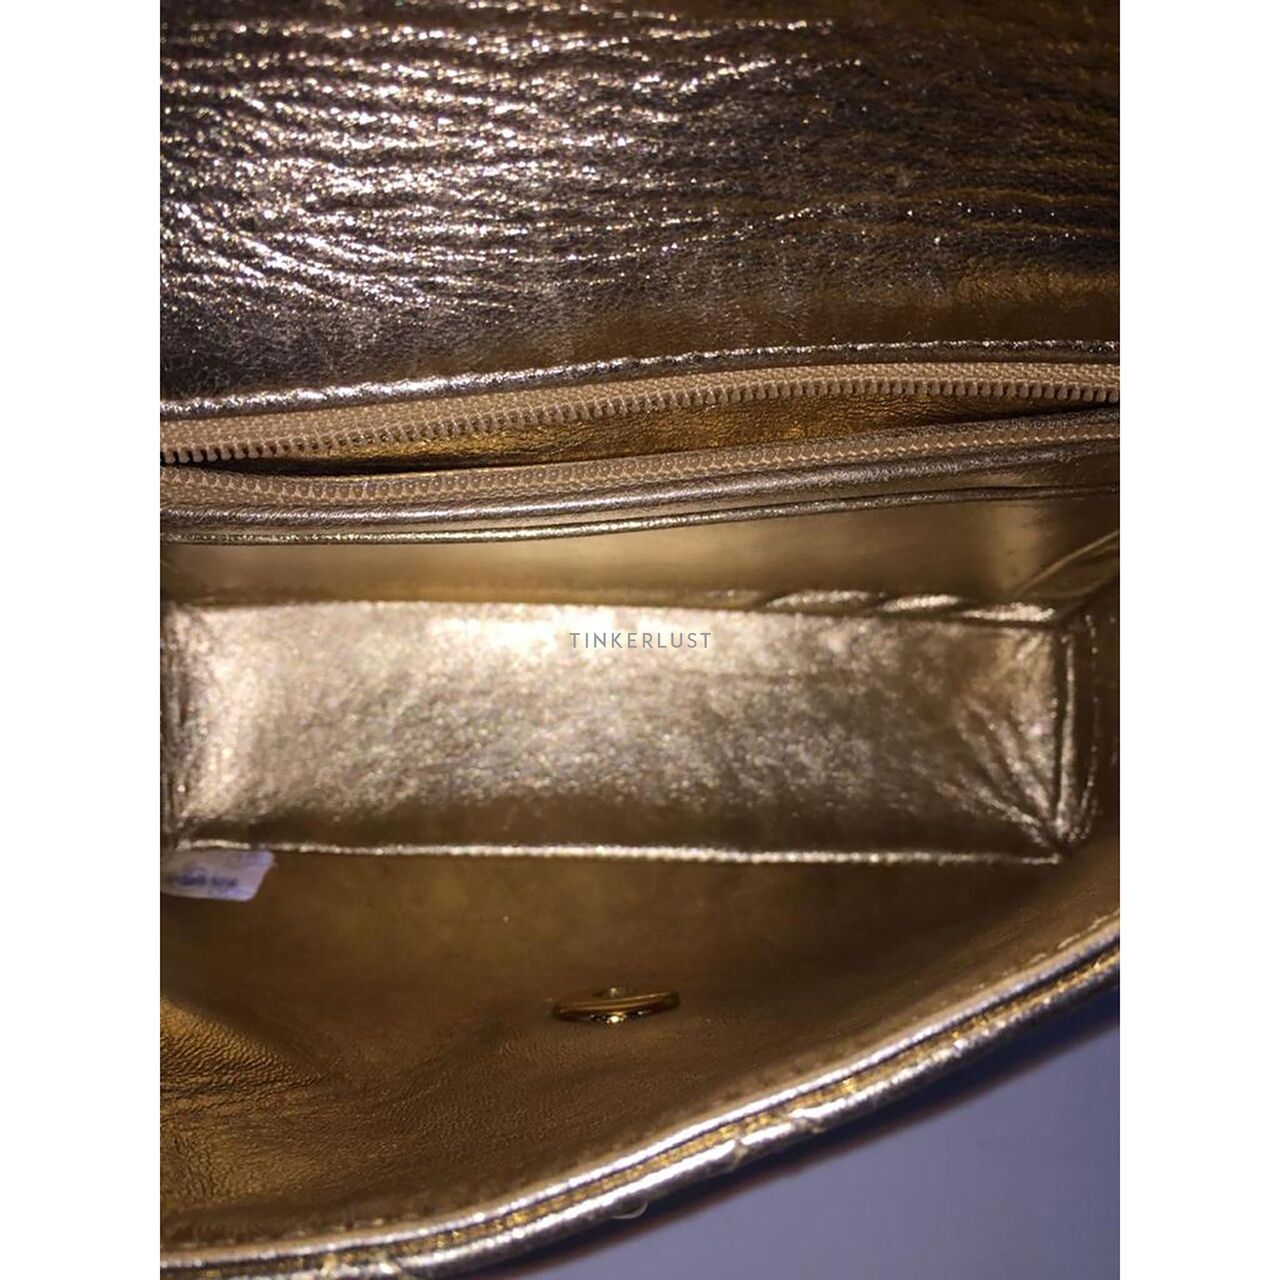 Chanel Mini Square Vintage Gold Lambskin GHW #2 Sling Bag